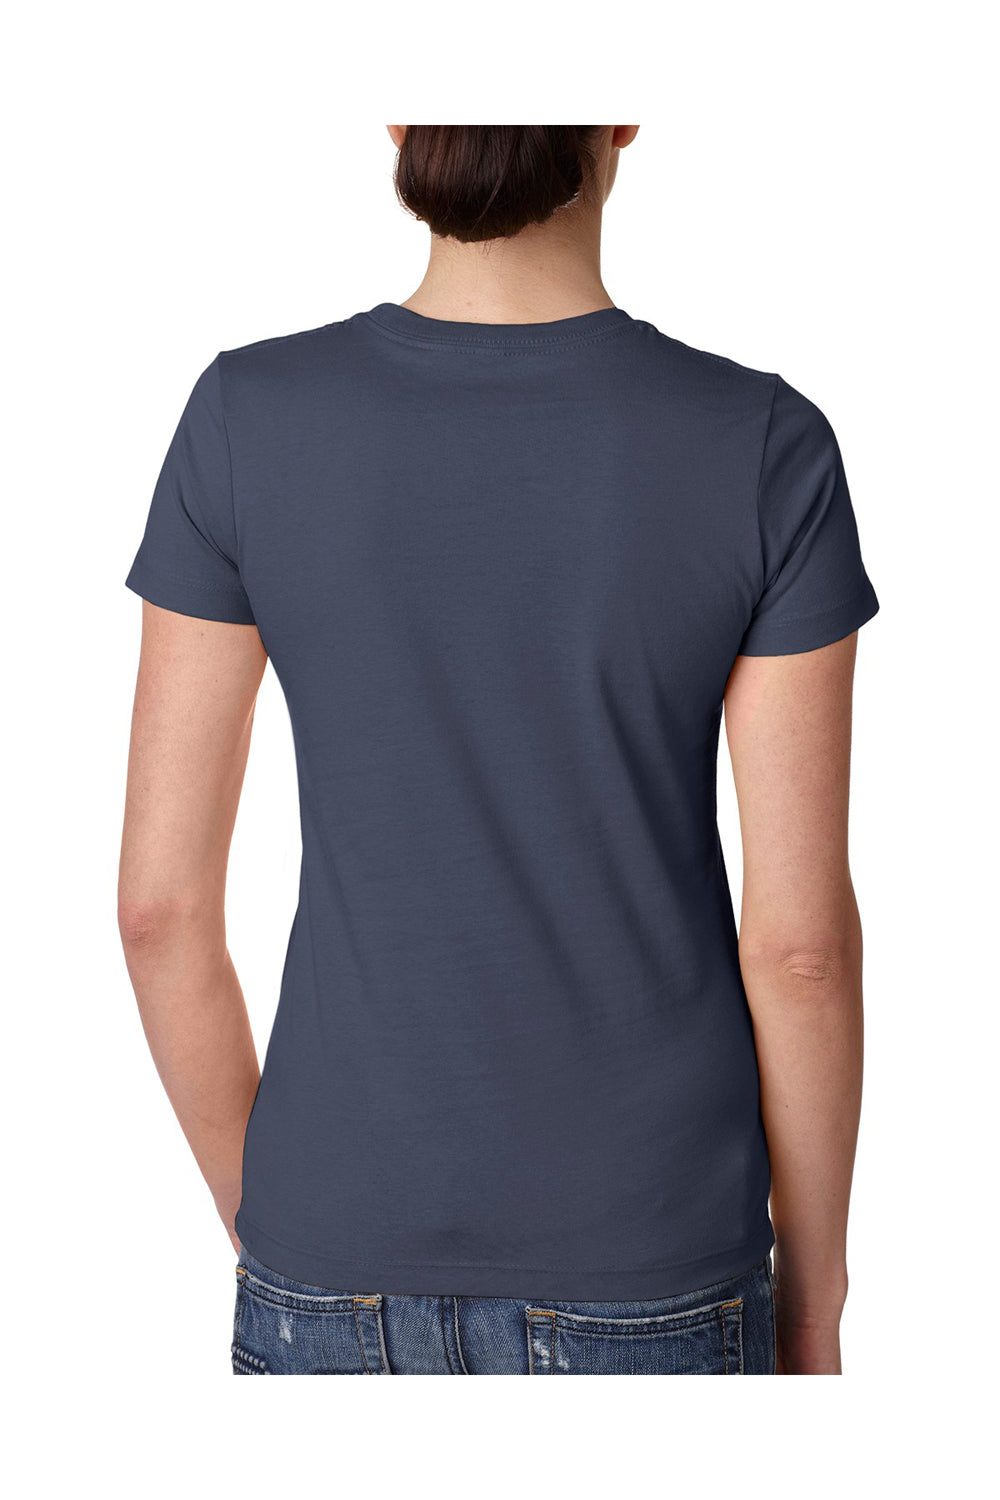 Next Level N3900 Womens Boyfriend Fine Jersey Short Sleeve Crewneck T-Shirt Indigo Blue Back